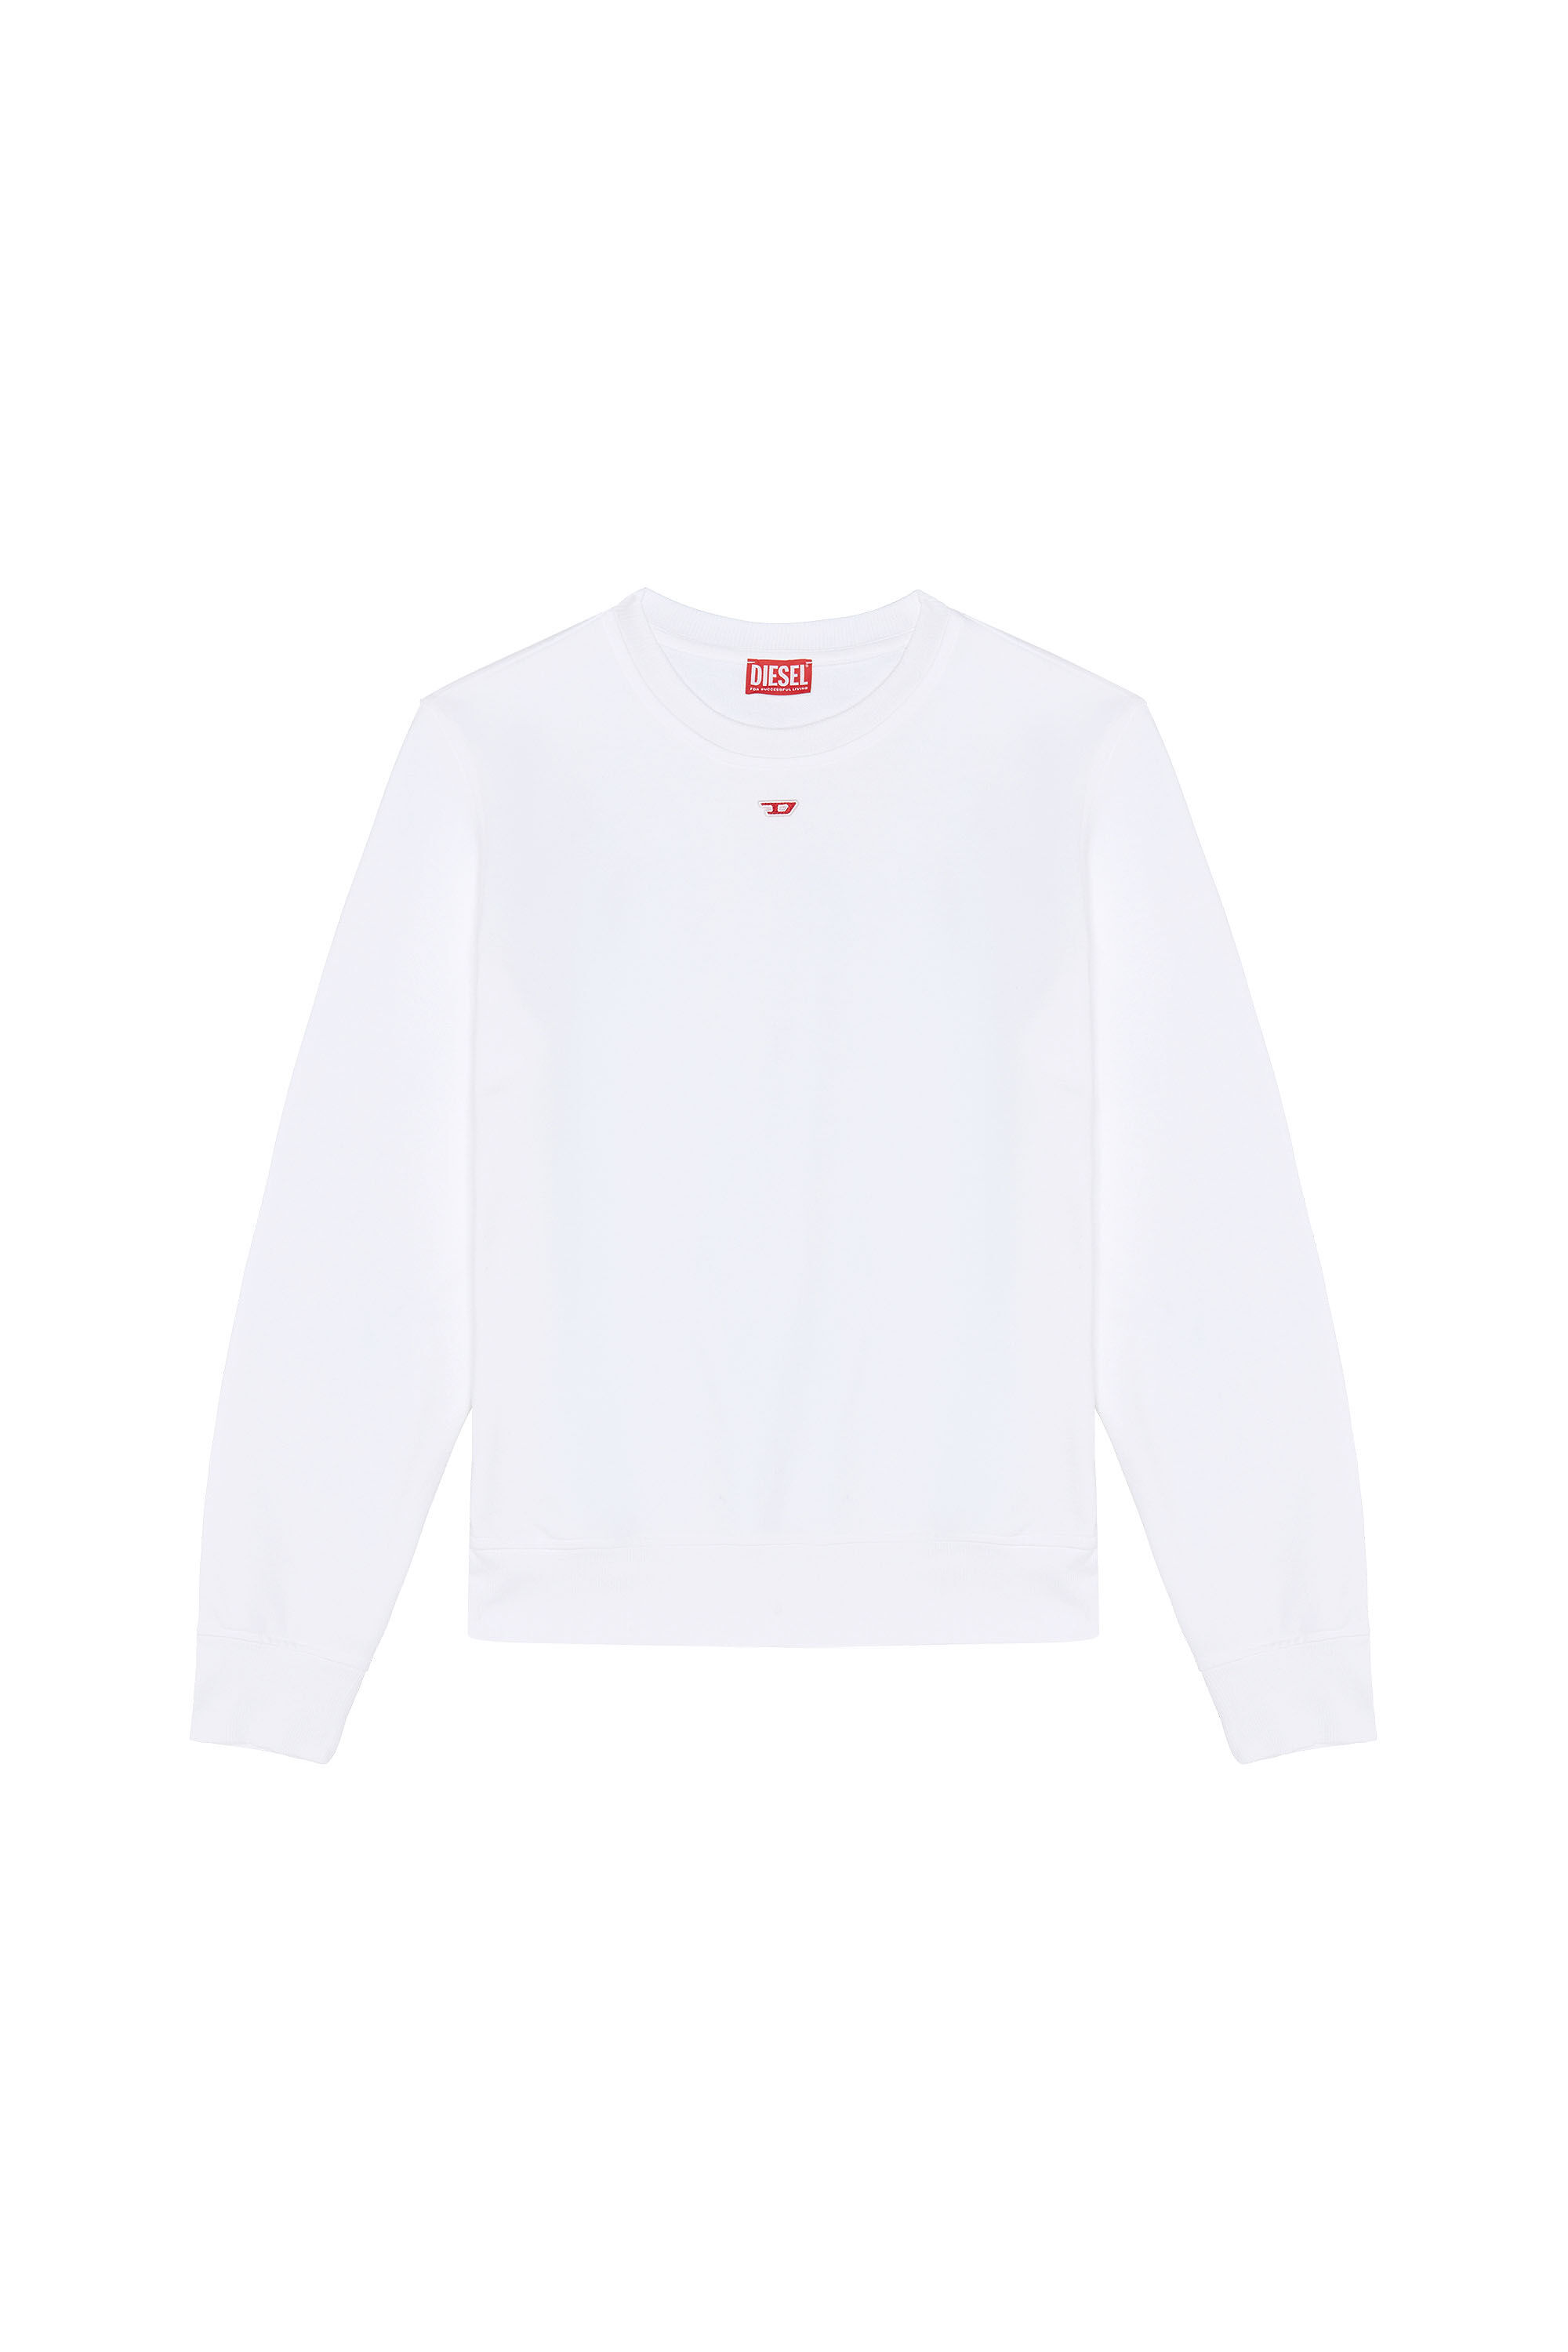 Diesel - S-GINN-D, Unisex Sweatshirt with mini D patch in White - Image 2